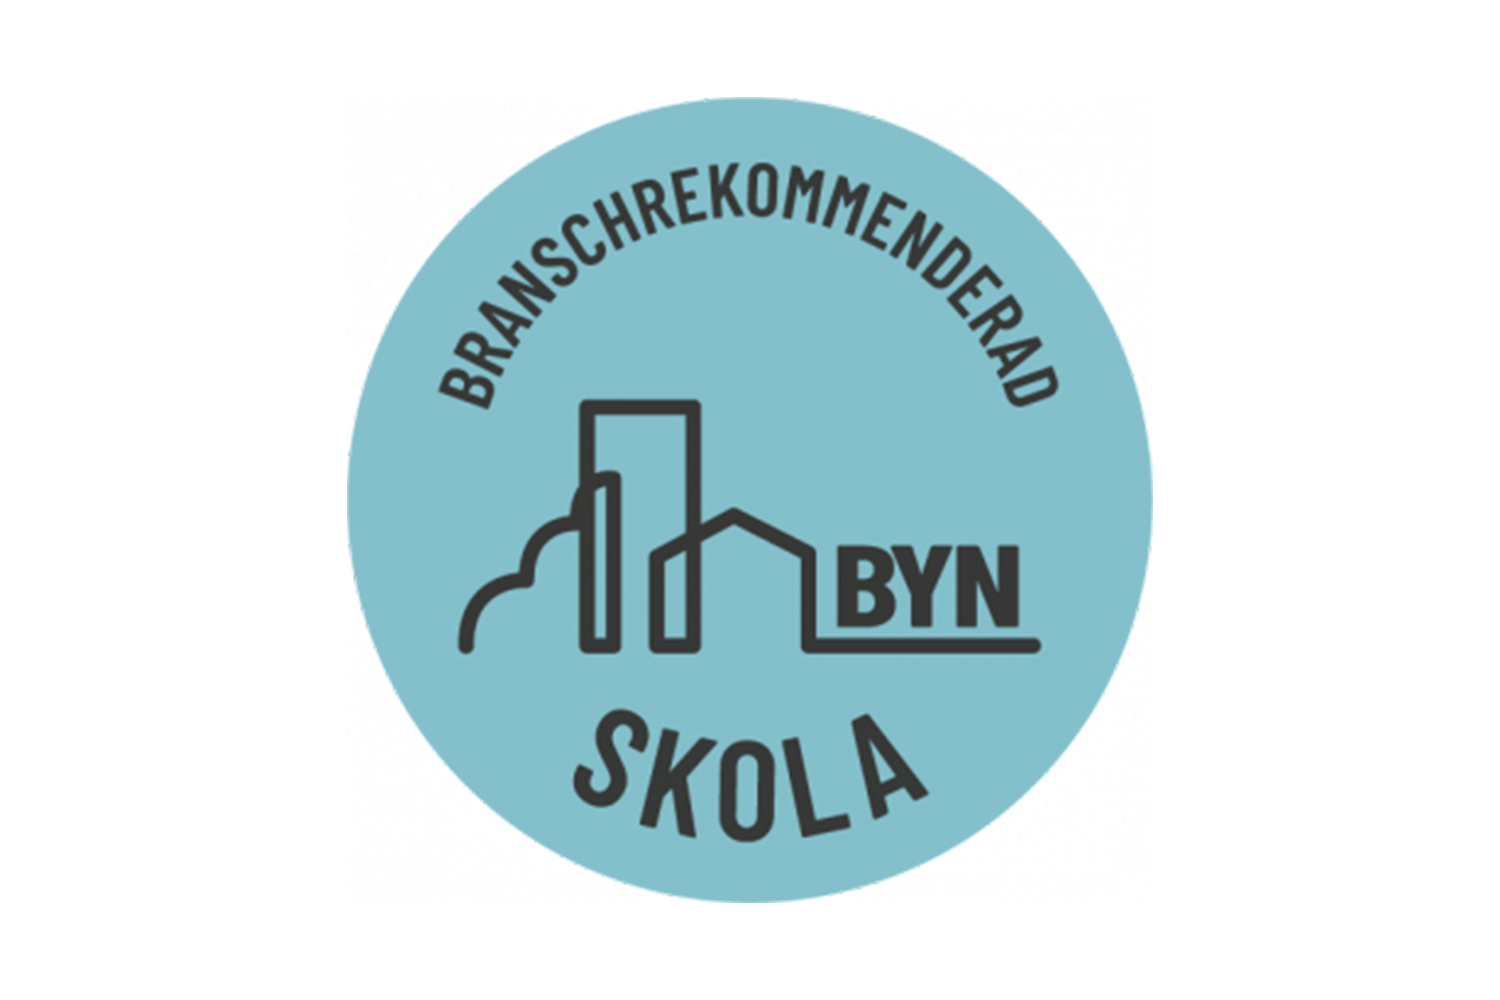 Branschrekommenderad skola BYN logotype